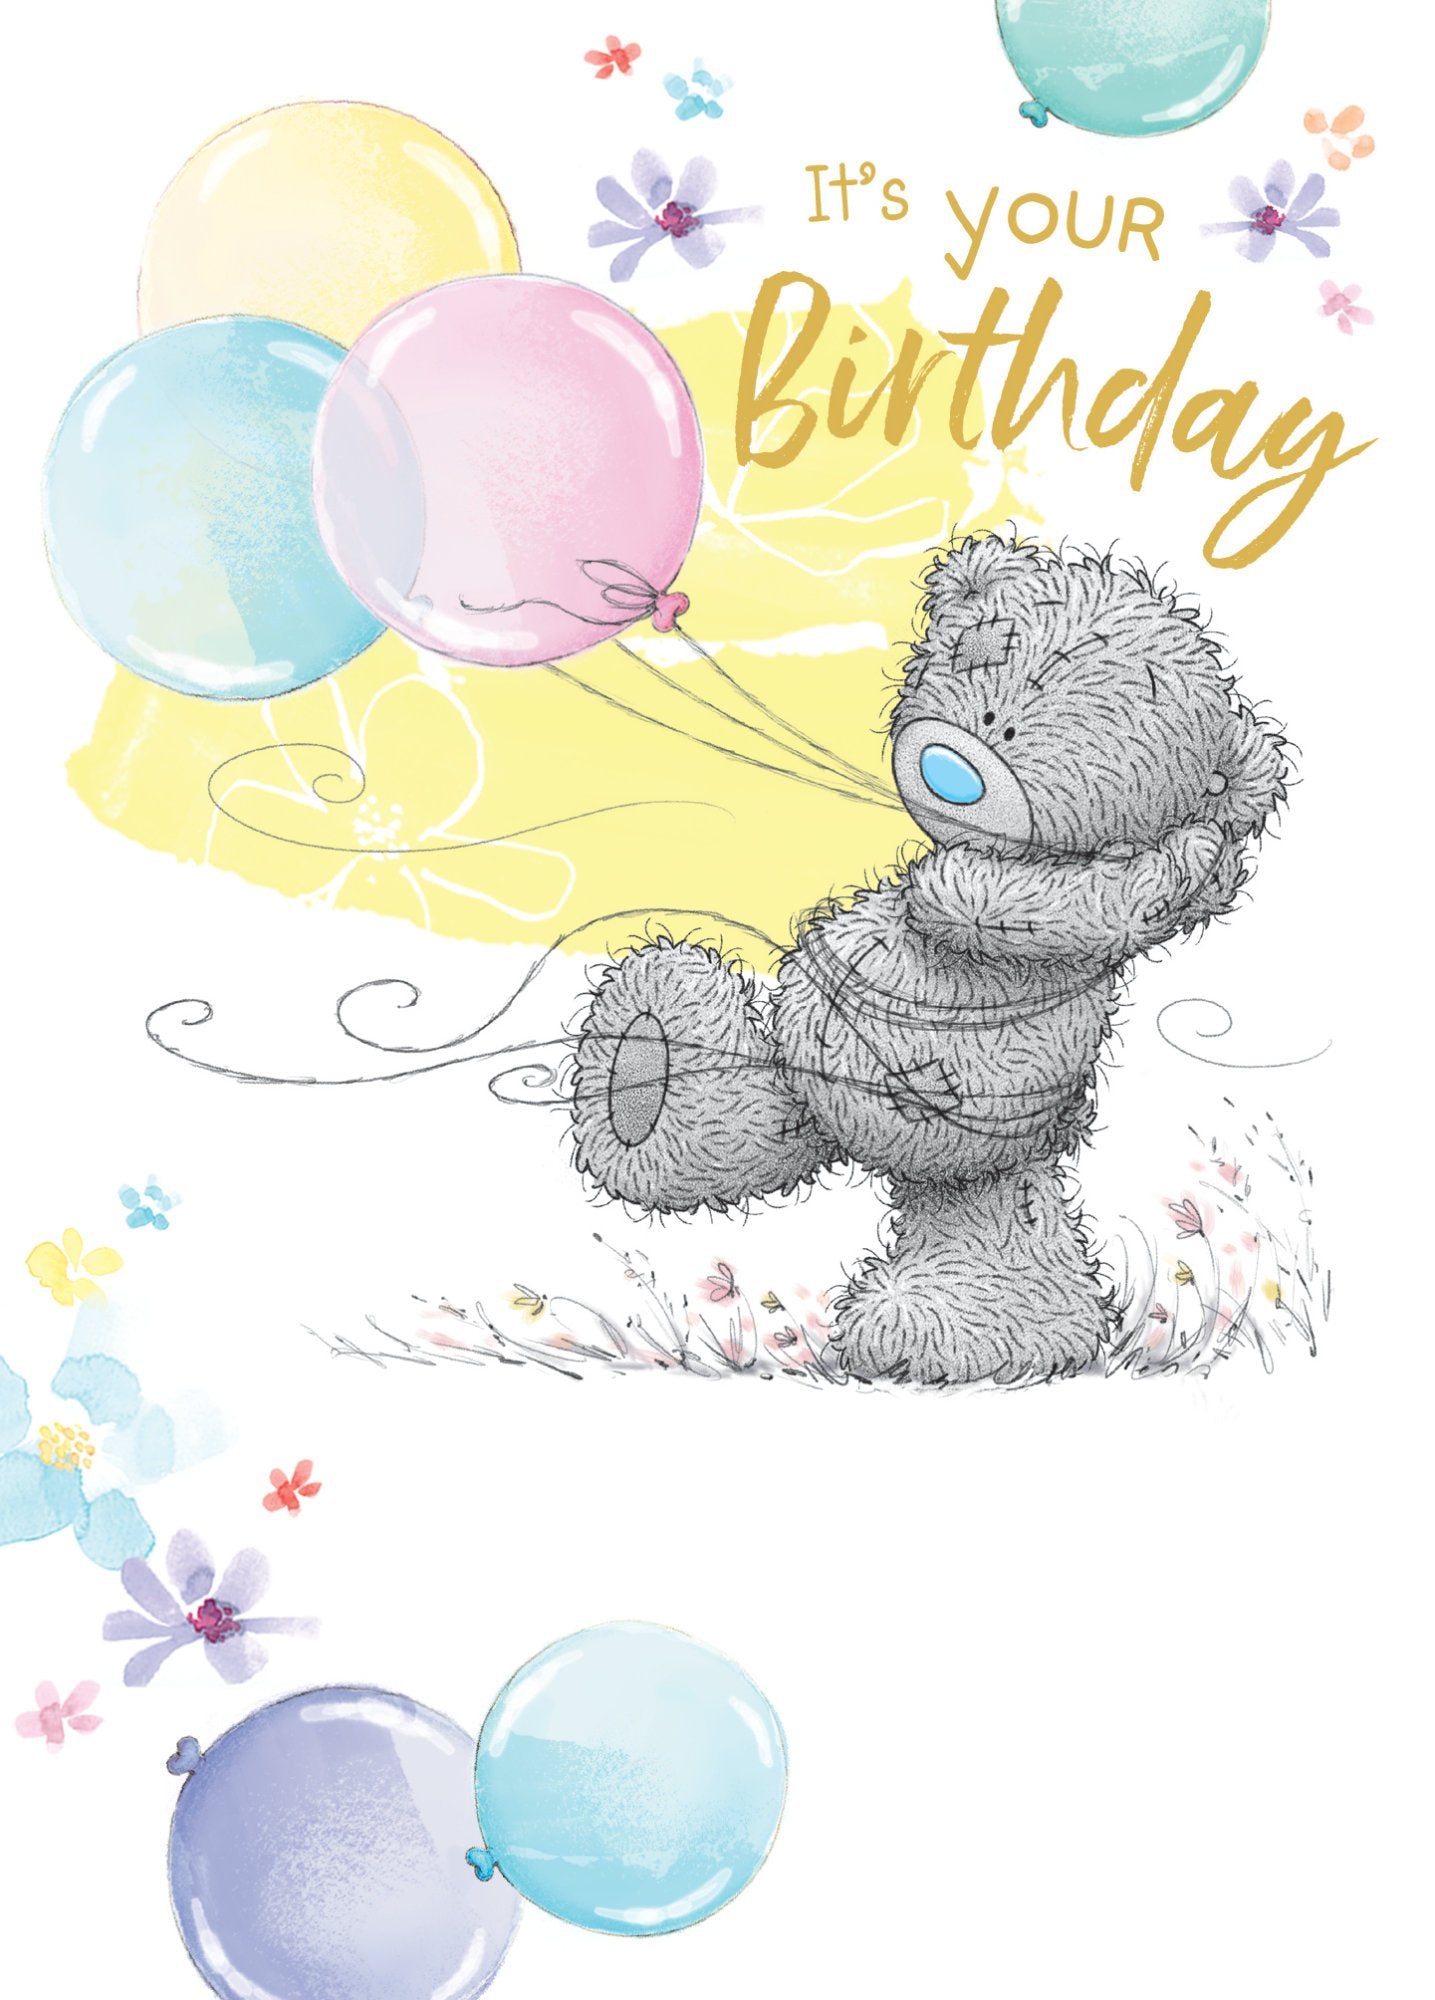 Photograph of Bear Flying Balloons Greetings Card at Nicole's Shop